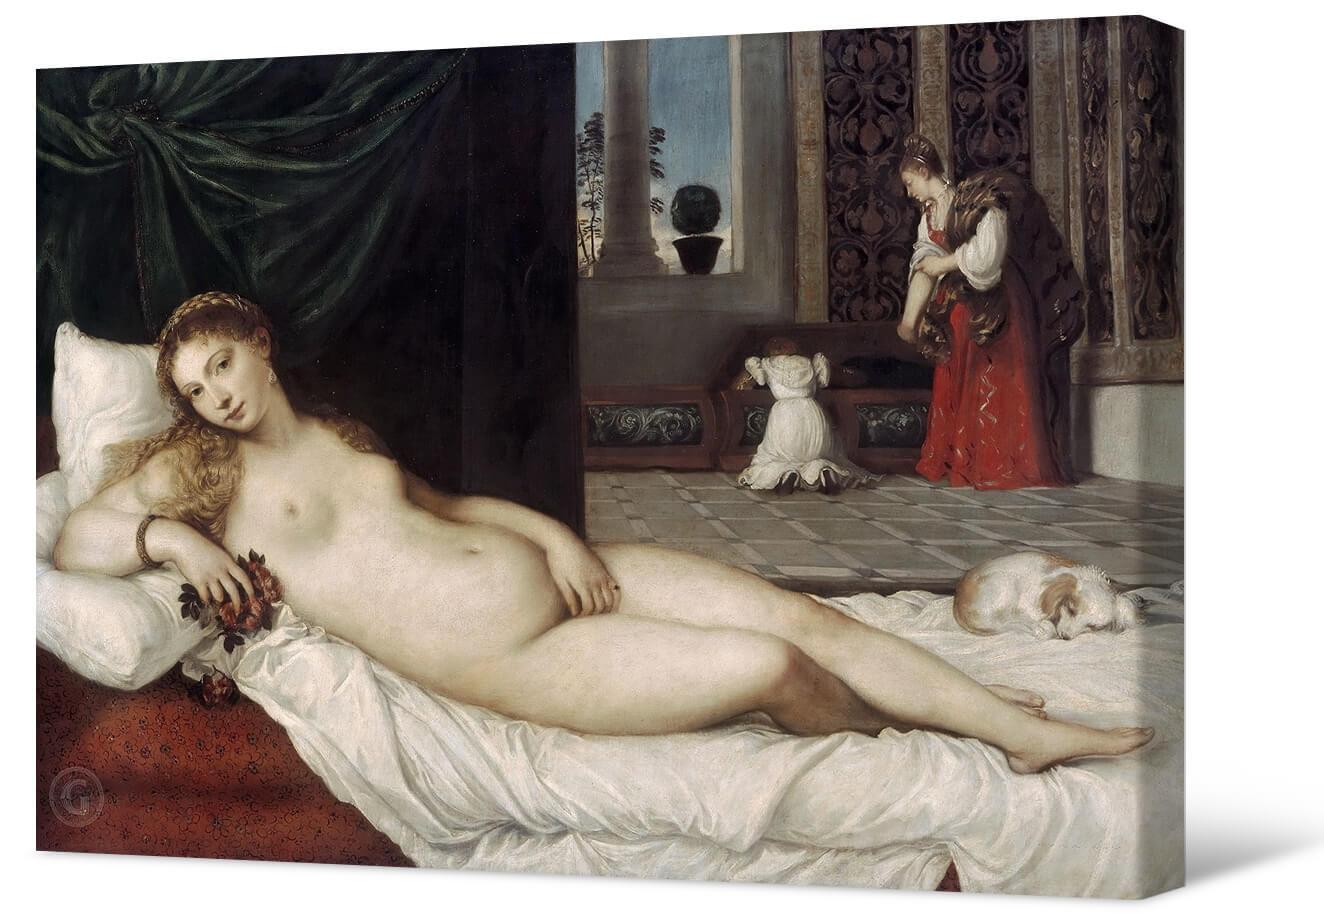 Titian - Venus si tso Urbino